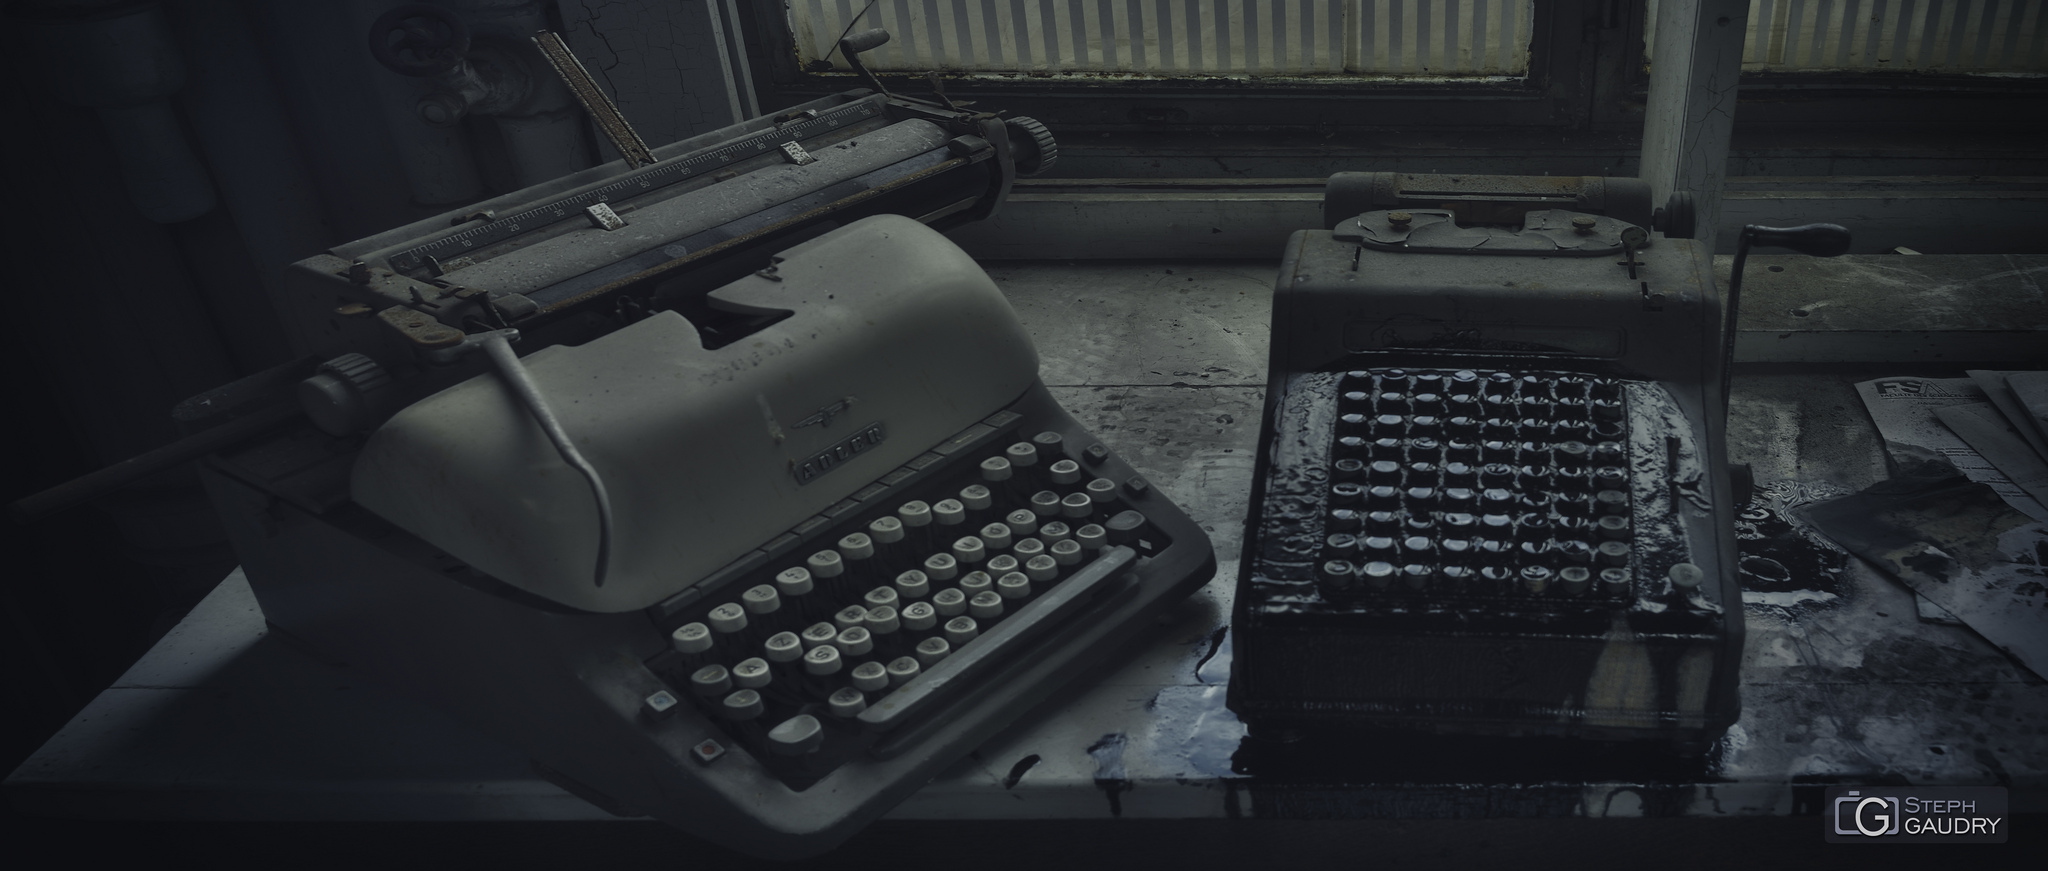 Adler typewriter [Cliquez pour lancer le diaporama]